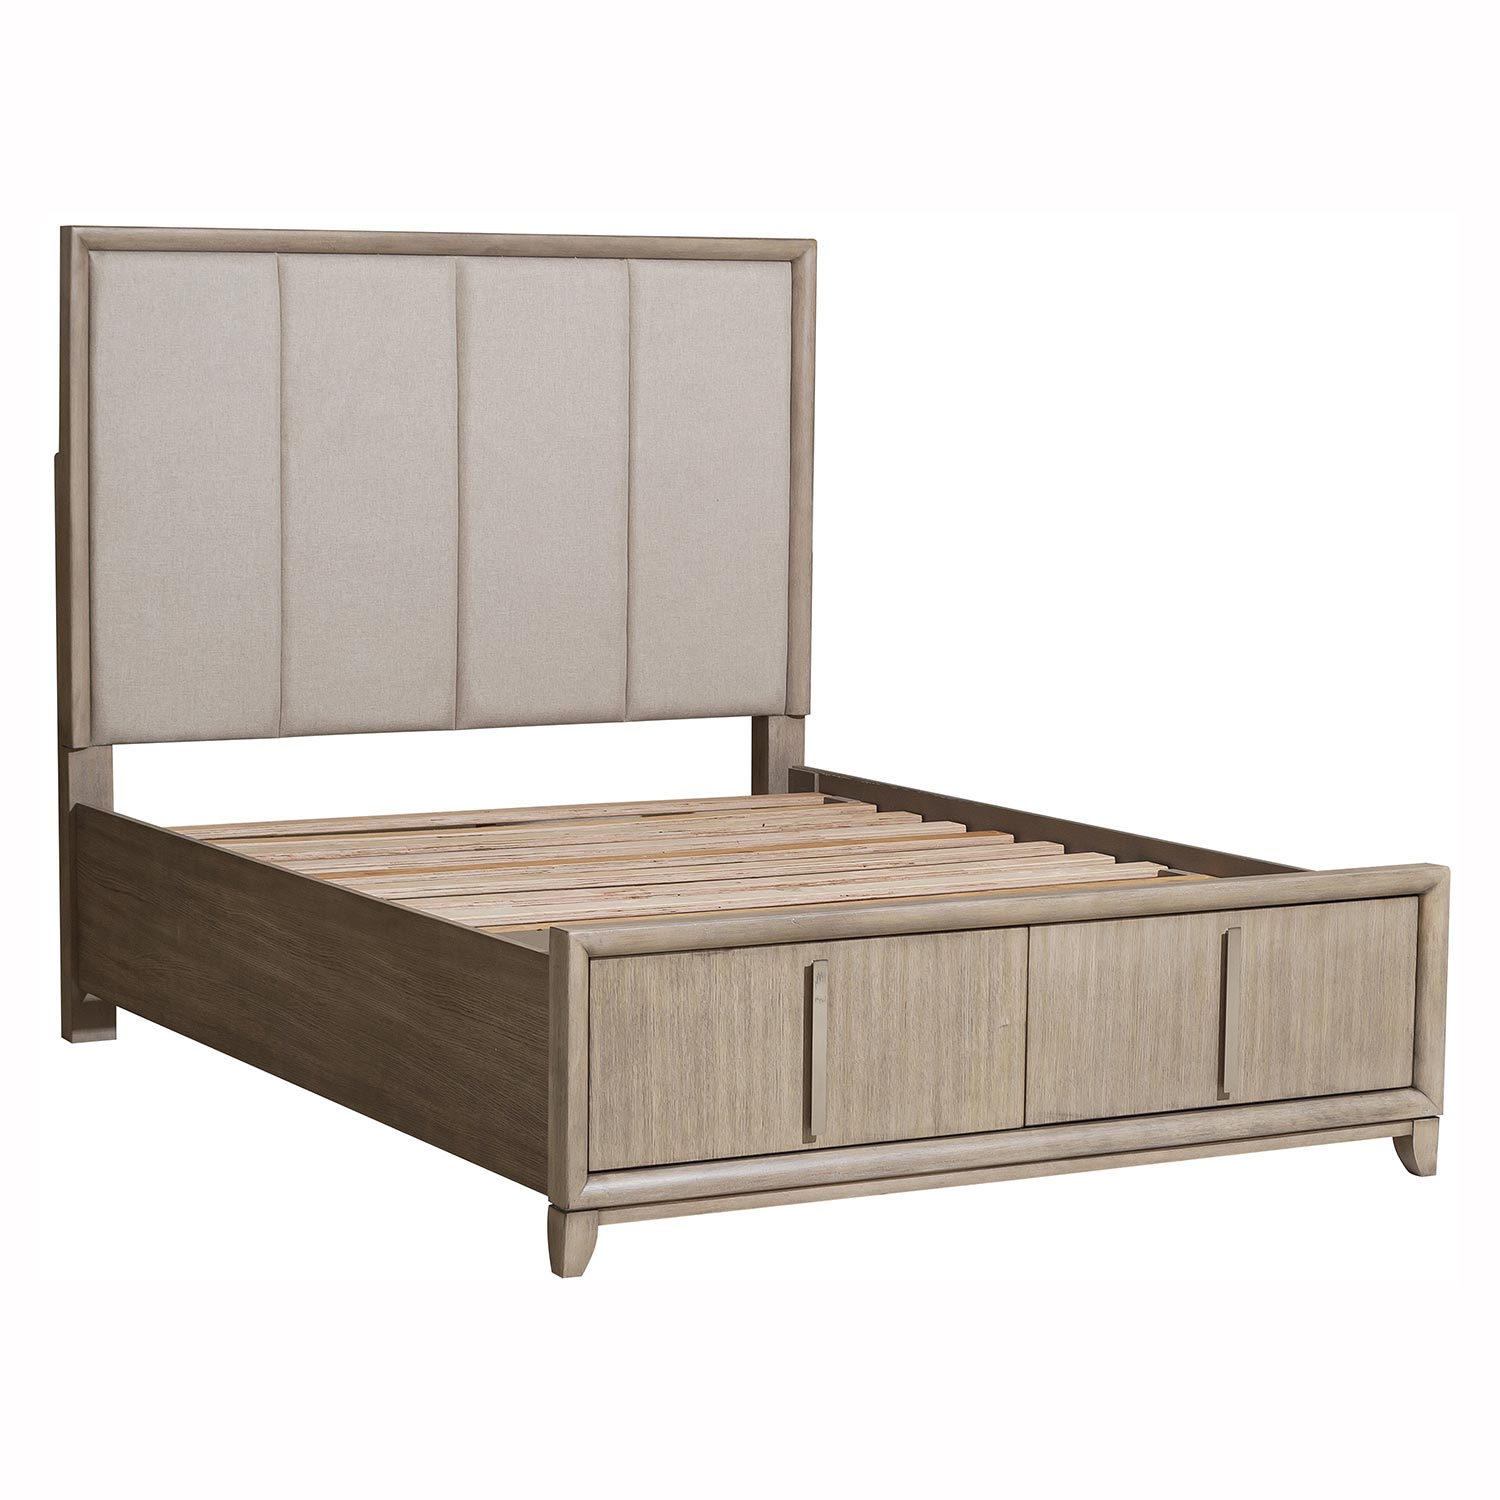 Homelegance McKewen Upholsterd Platform Bed with Footboard Storage - Light Gray